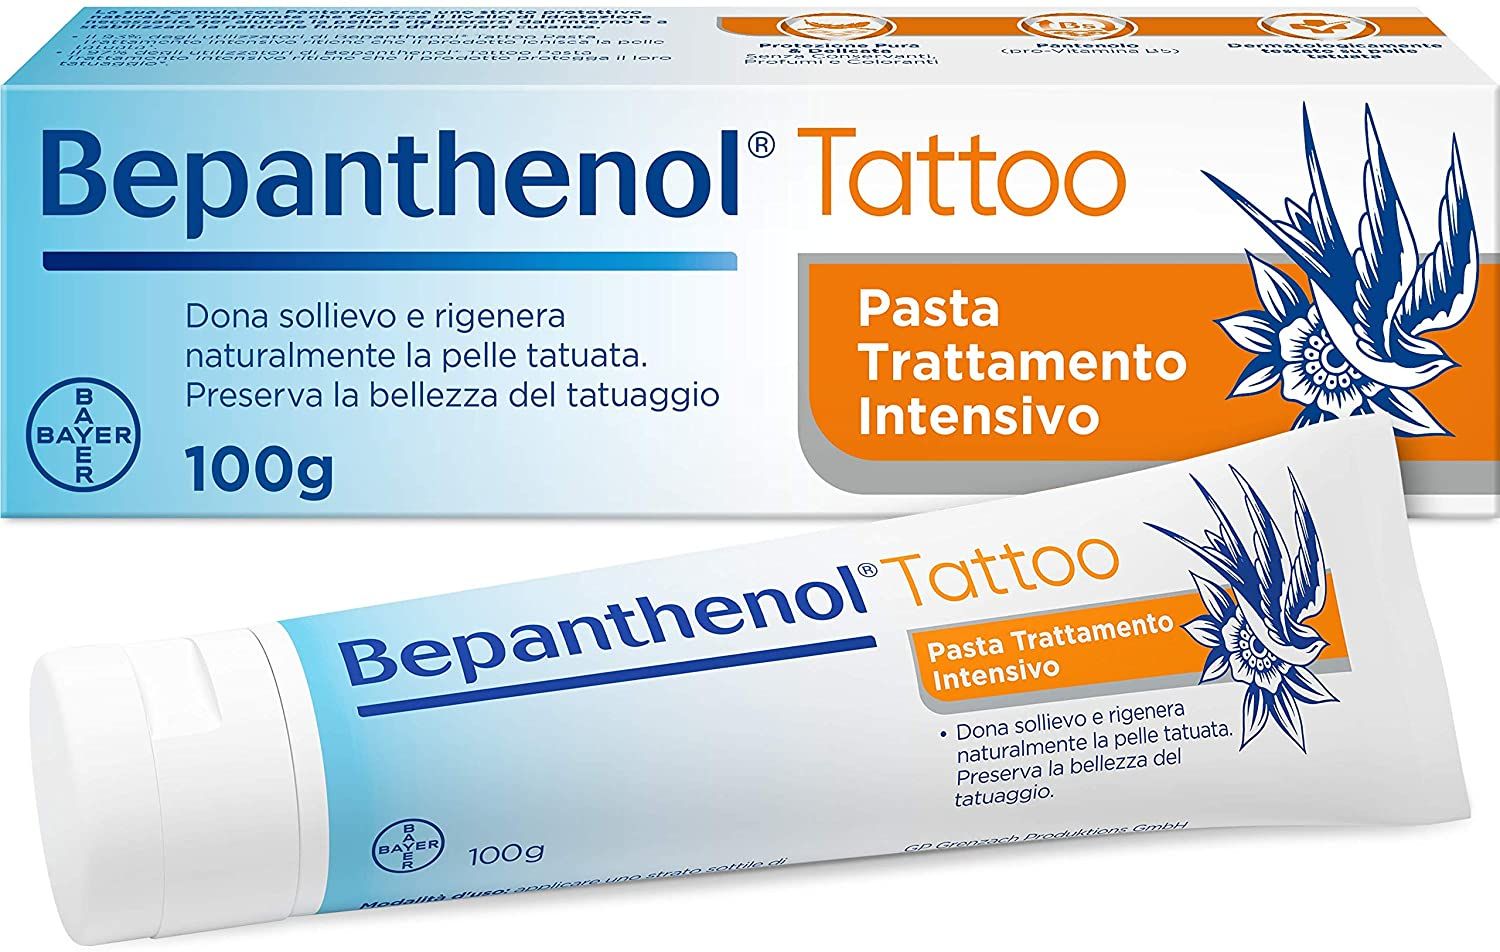 Bepanthenol tattoo pasta trattamento intensivo 100g - Vivafarmacia